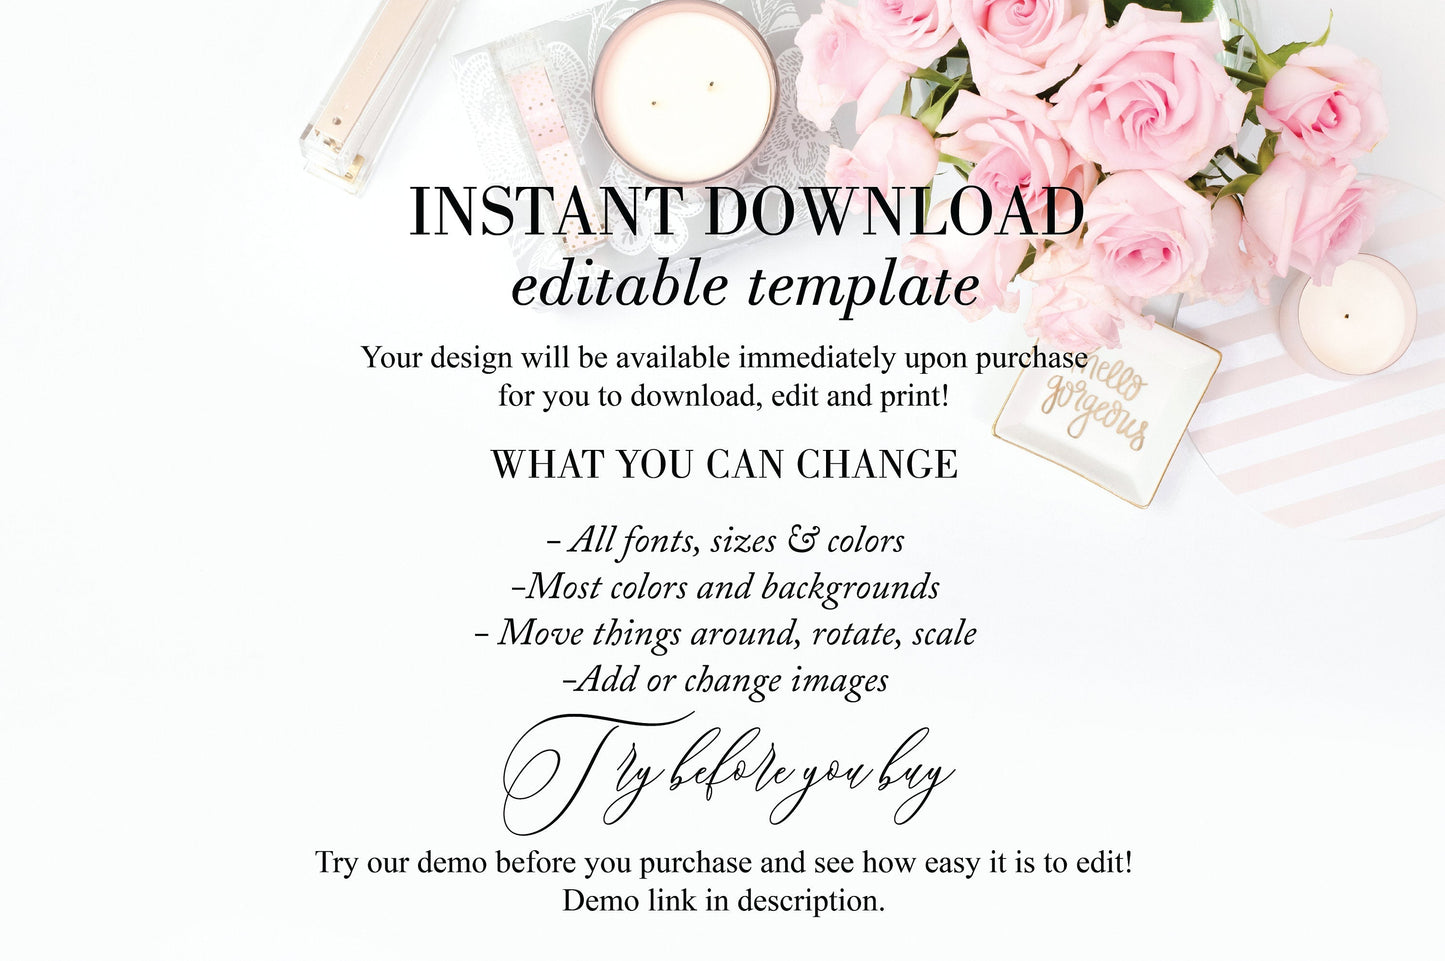 Printable Greenery Geometric Wedding Invitation Set Editable Template, DIY Instant Download Invites, Invitation Suite, 100 % editable - Abi WEDDING INVITATION SETS SAVVY PAPER CO